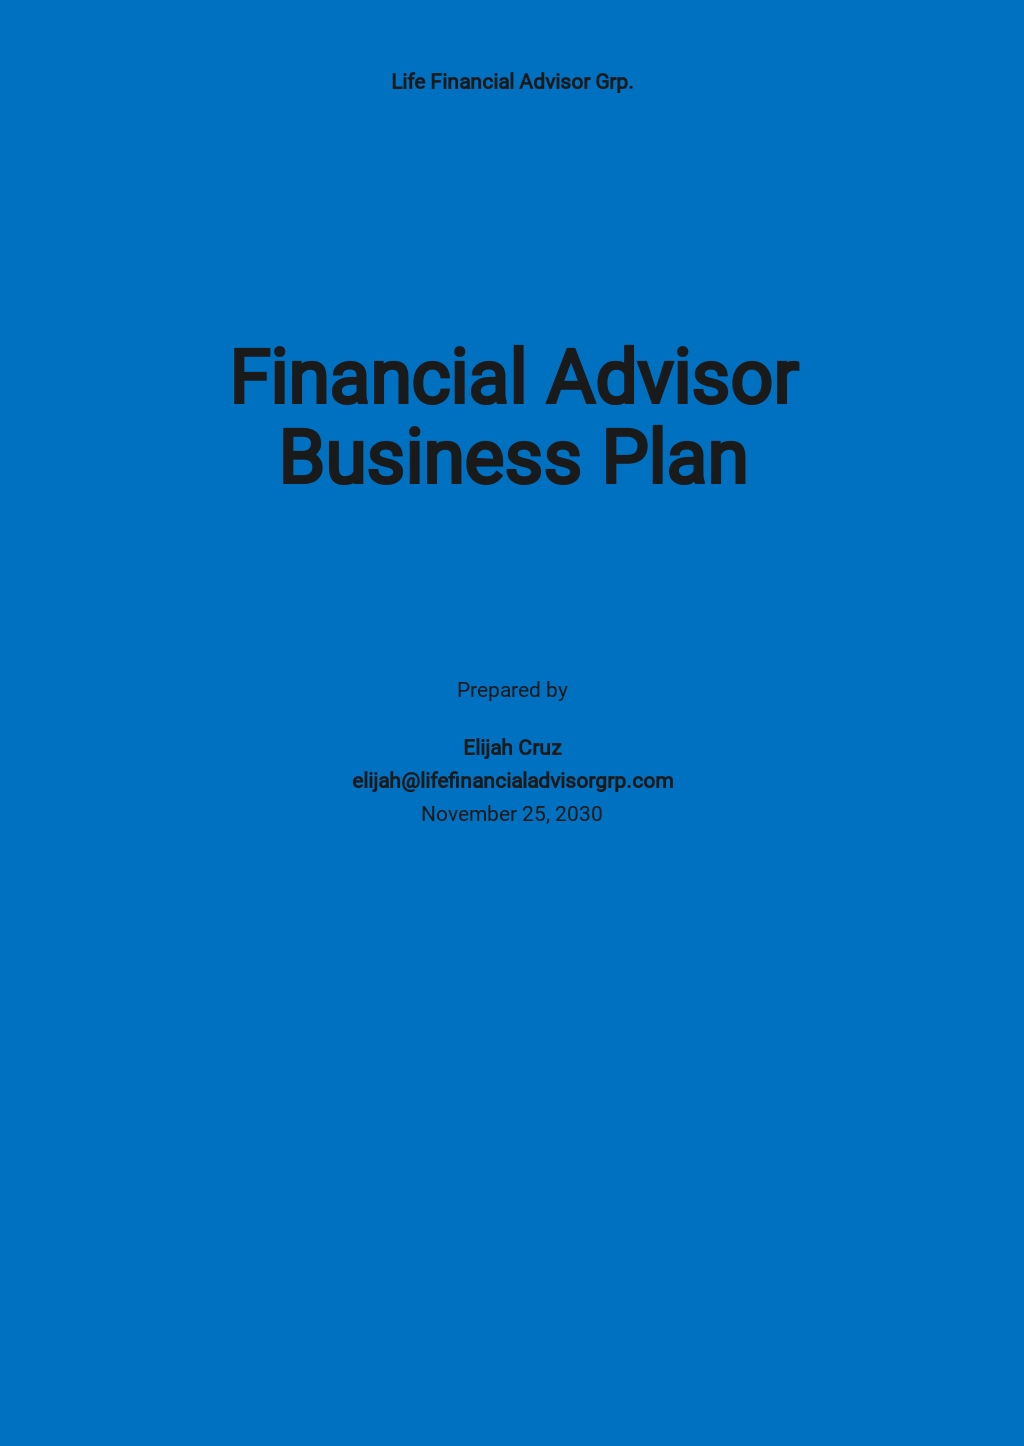 merrill lynch financial advisor business plan sample